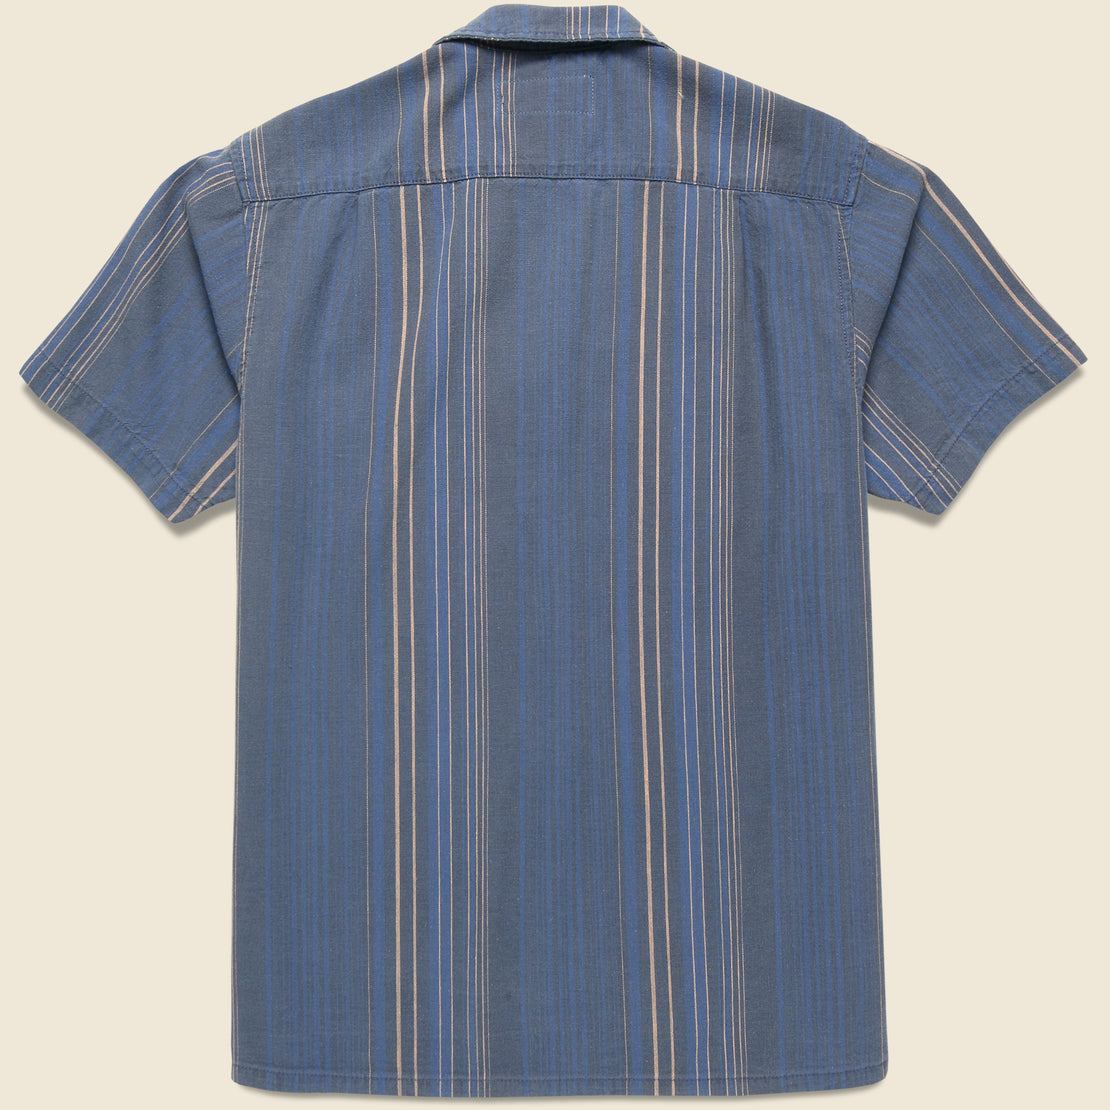 Serra Camp Shirt - Indigo Stripe - Imogene + Willie - STAG Provisions - Tops - S/S Woven - Stripe